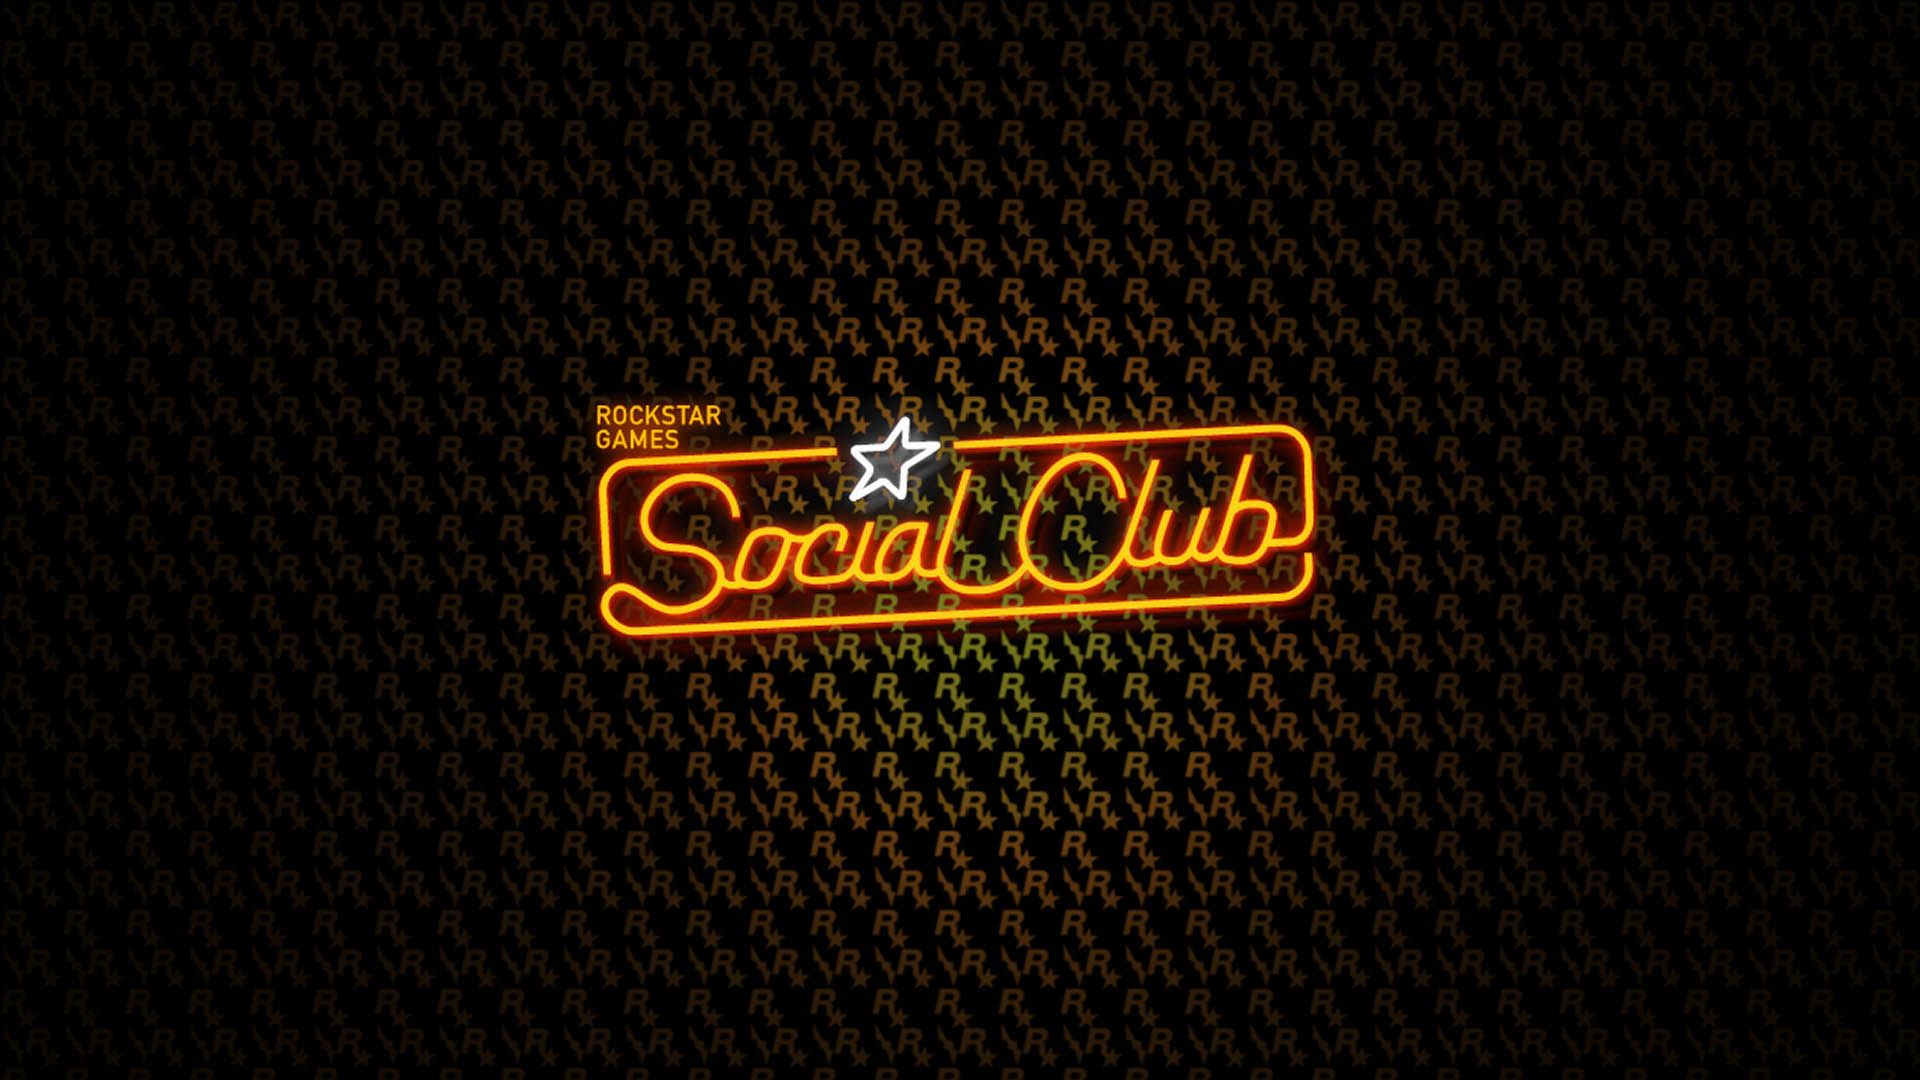 Grand Theft Auto V Rockstar Games Social Club Video Game Emblem